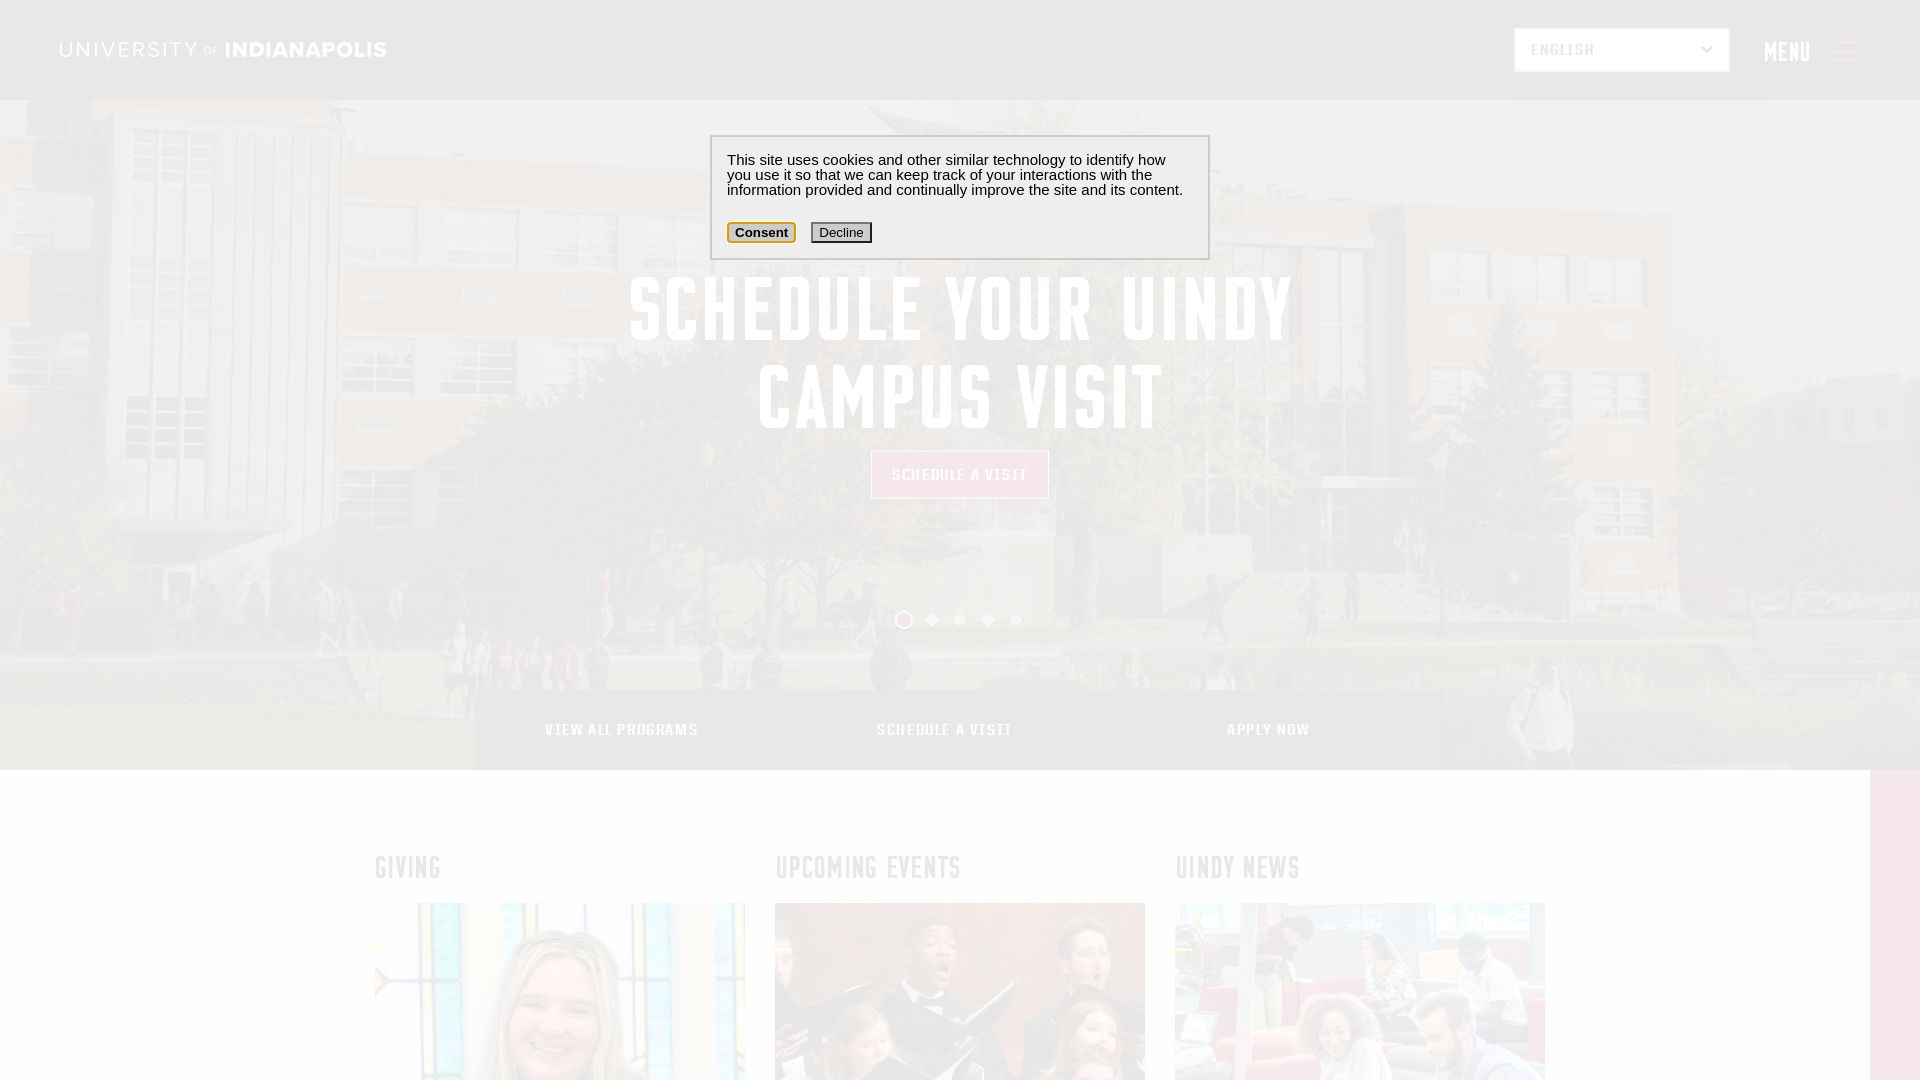 Website status uindy.edu is   ONLINE